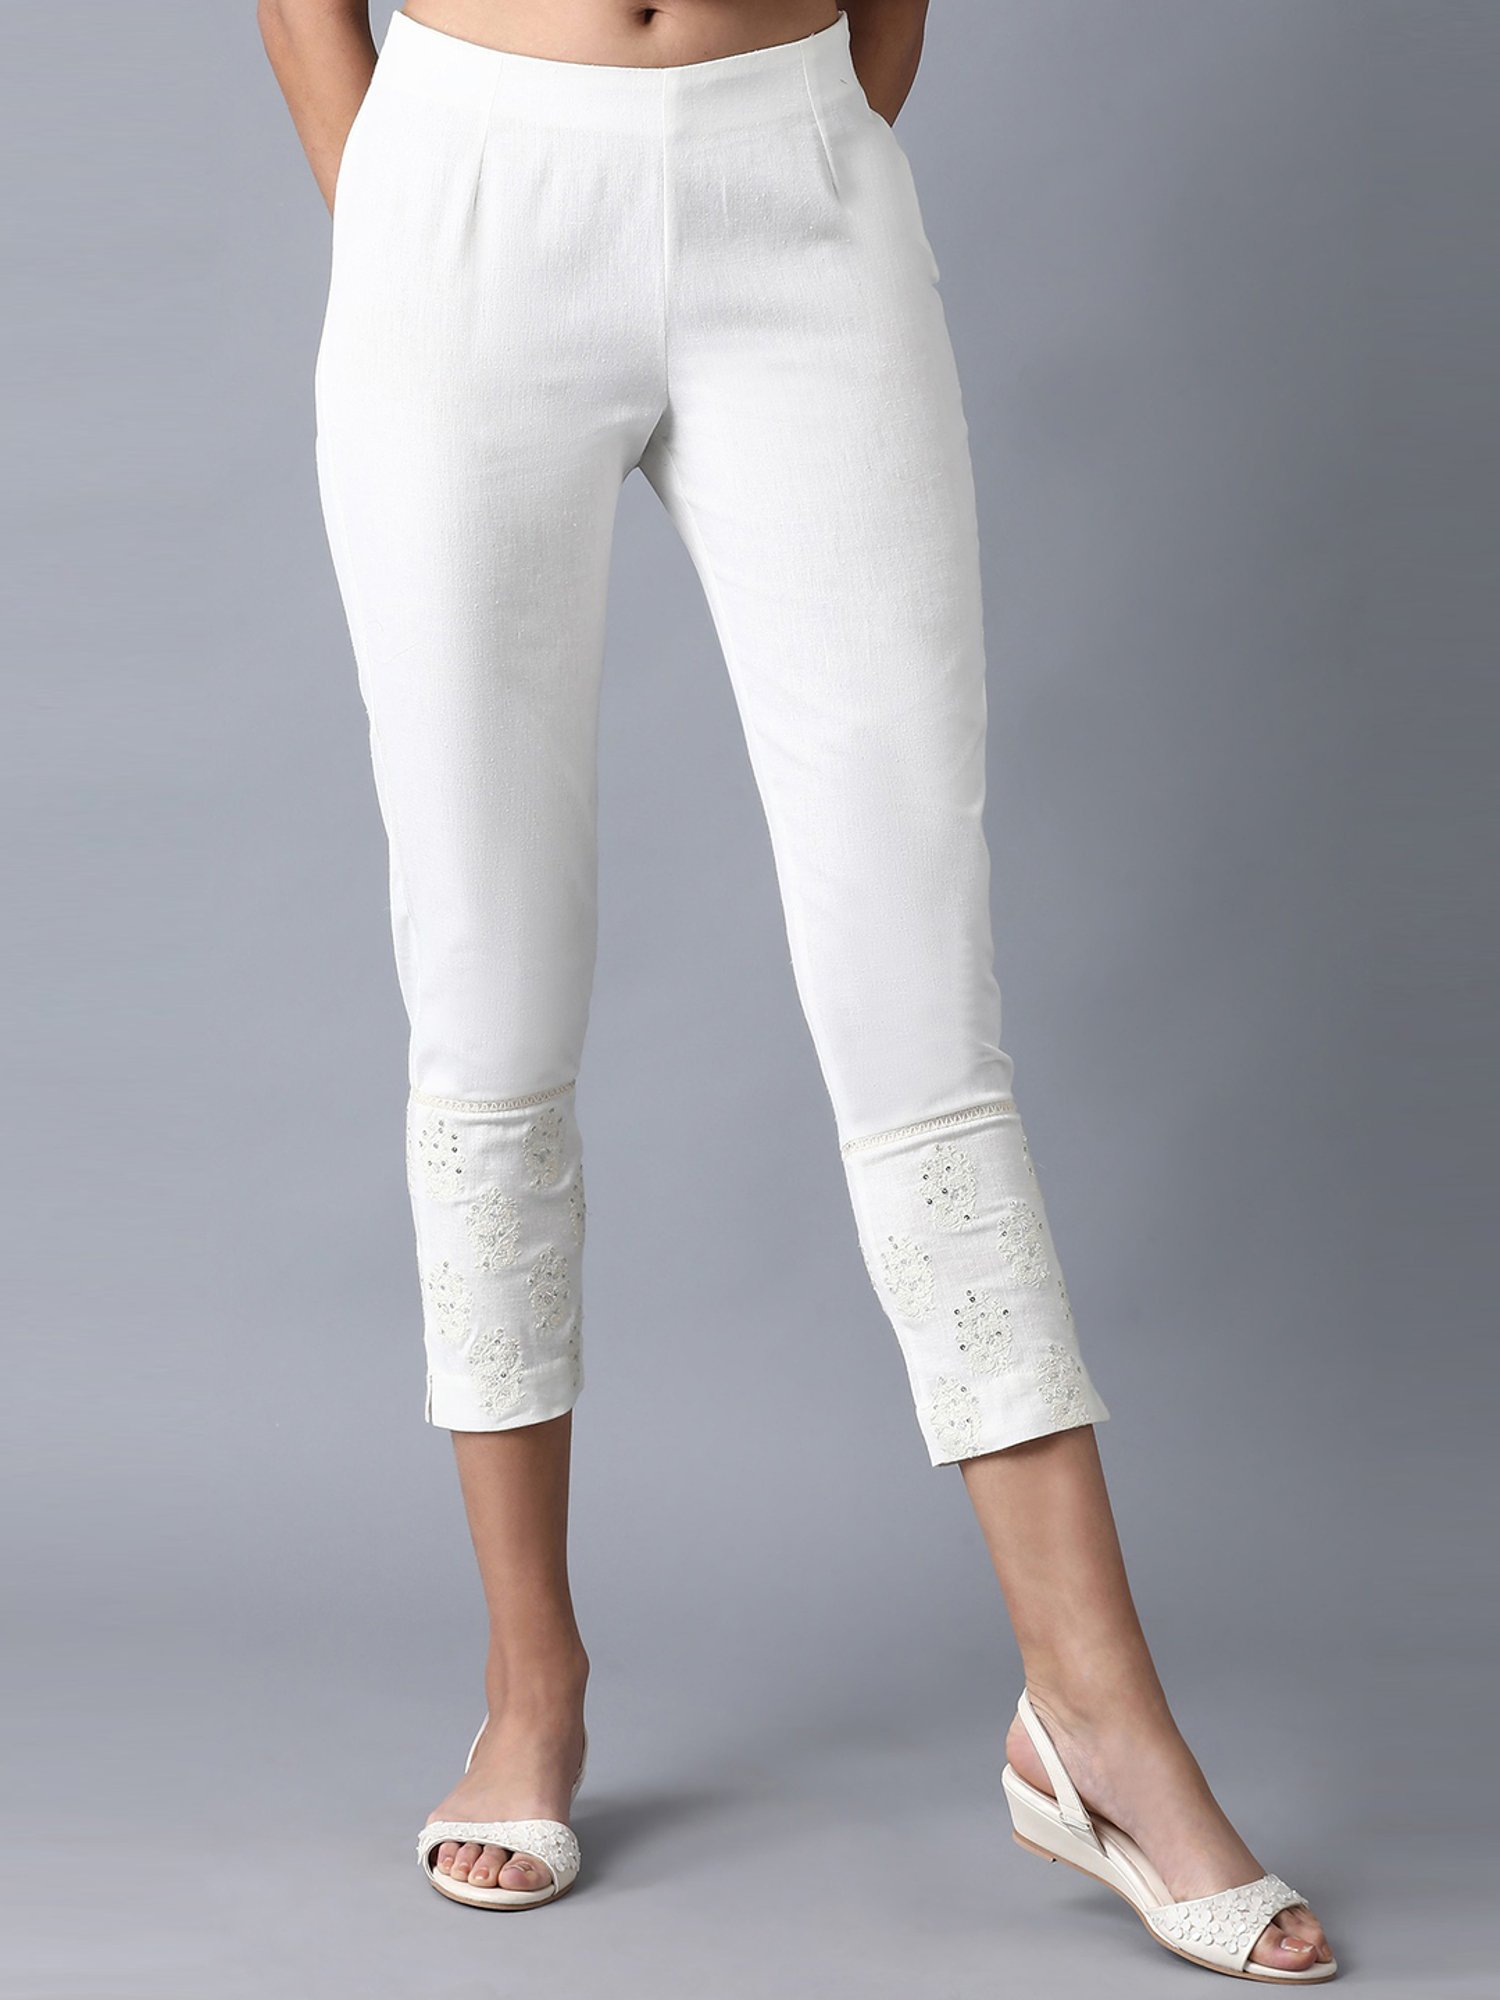 Cotton pants are trending this season – Bunaai